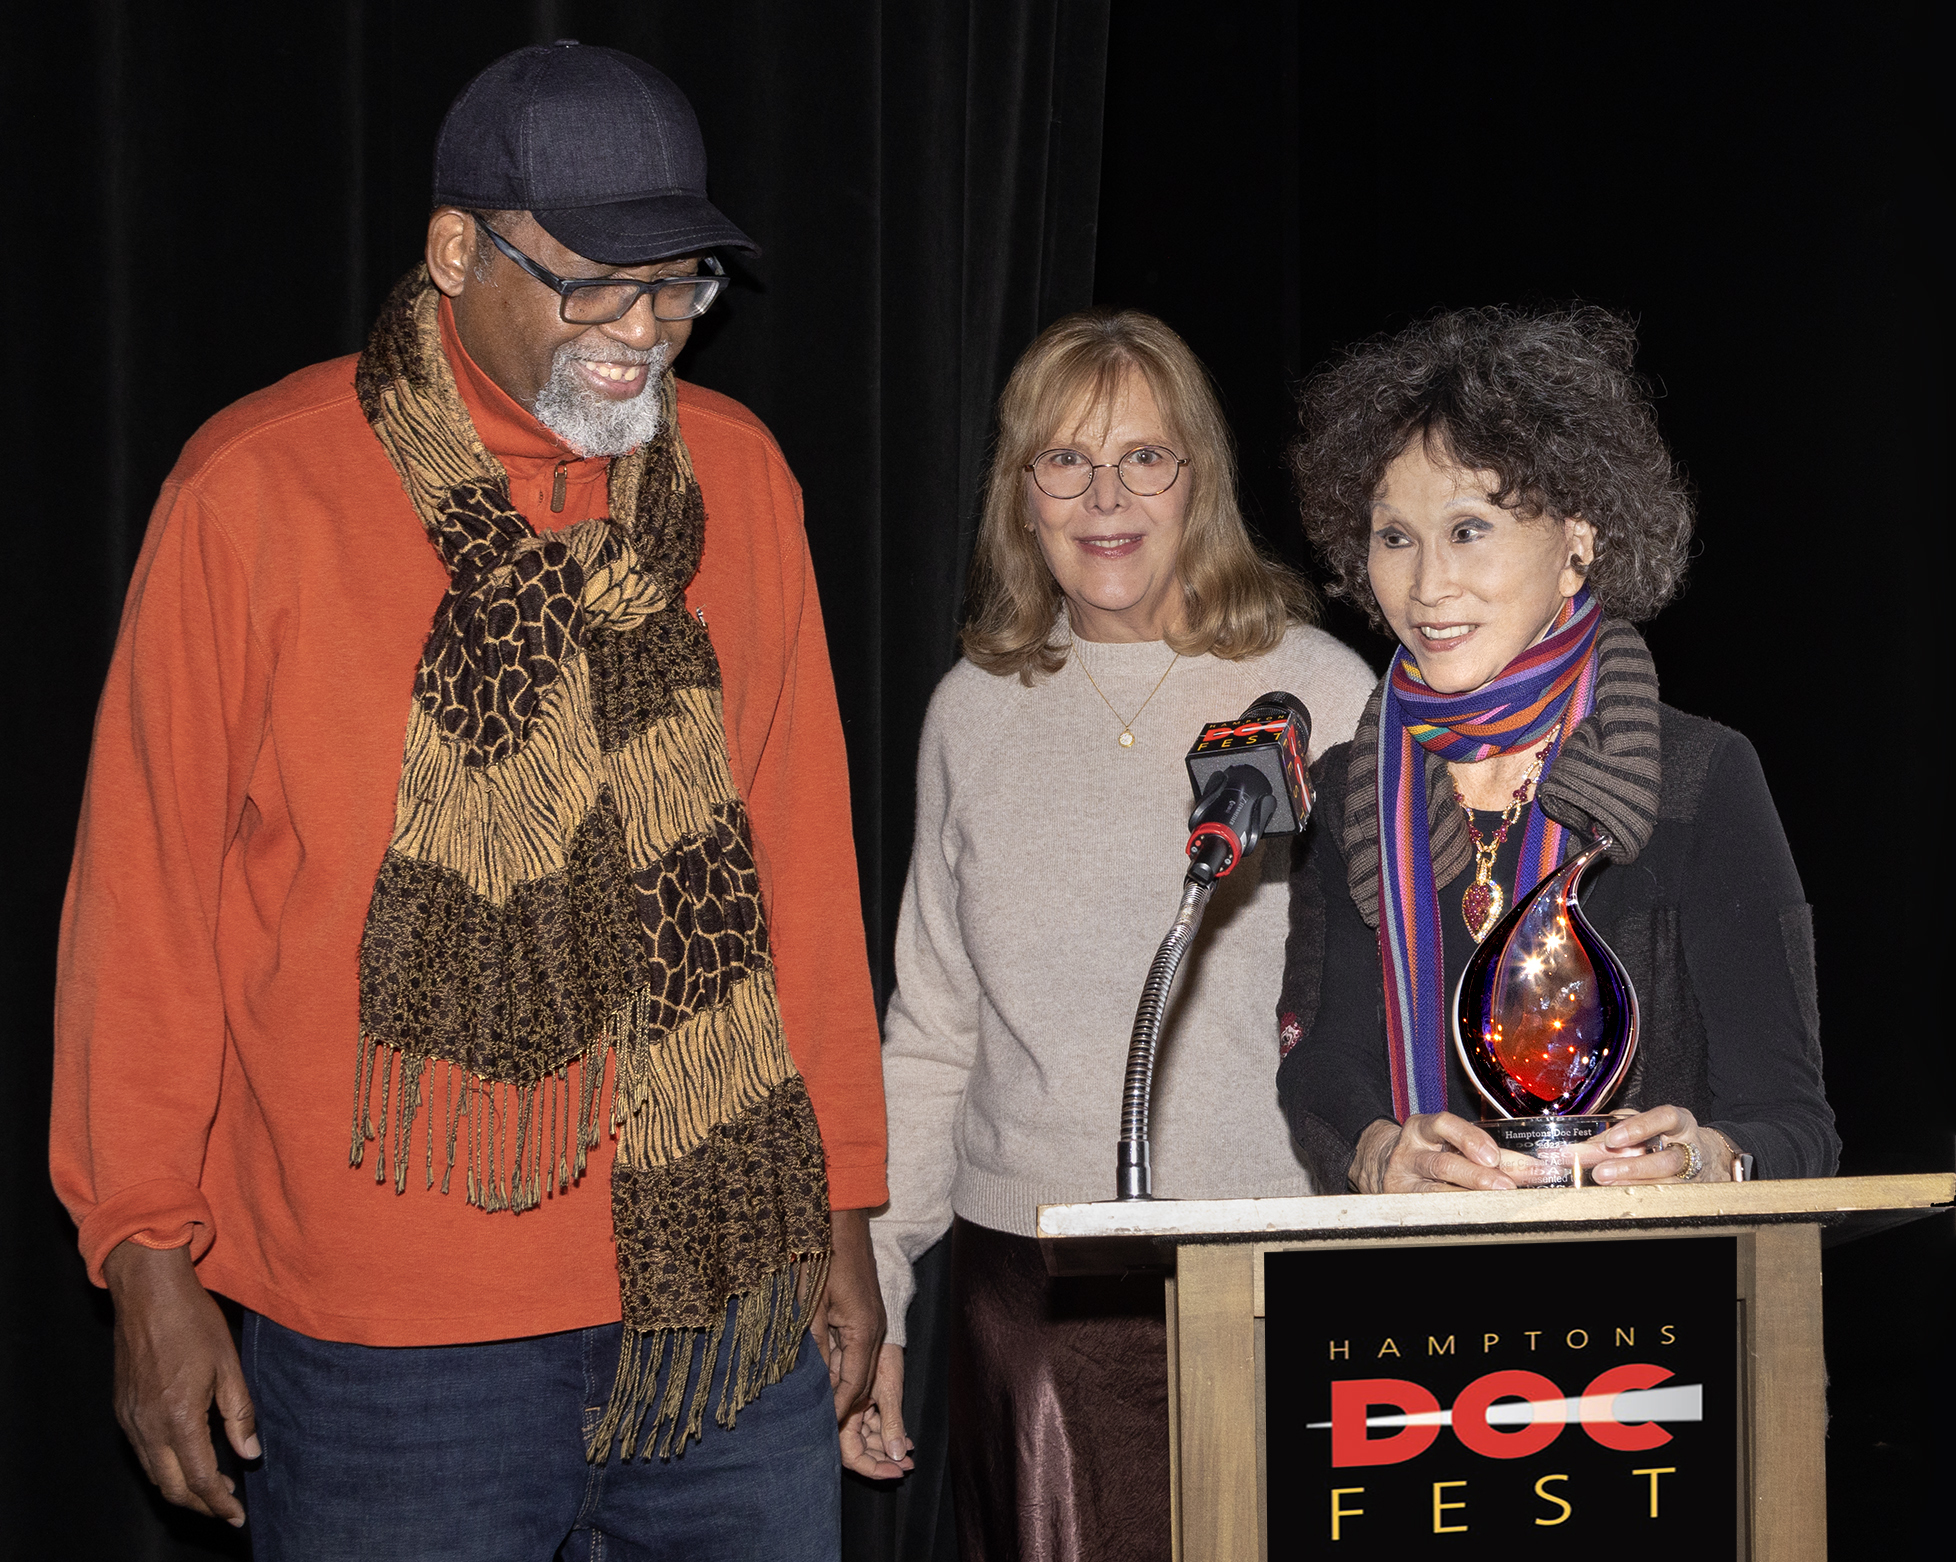 Sam Pollard receives the HDF 2022 Pennebaker Career Achievement Award at the December 3 gala at Bay Street Theater from filmmakers Chris Hegedus, who was Pennebaker’s partner, and Lana Jokel, who sponsors the annual award. CB GRUBB/COURTESY HAMPTONS DOC FEST